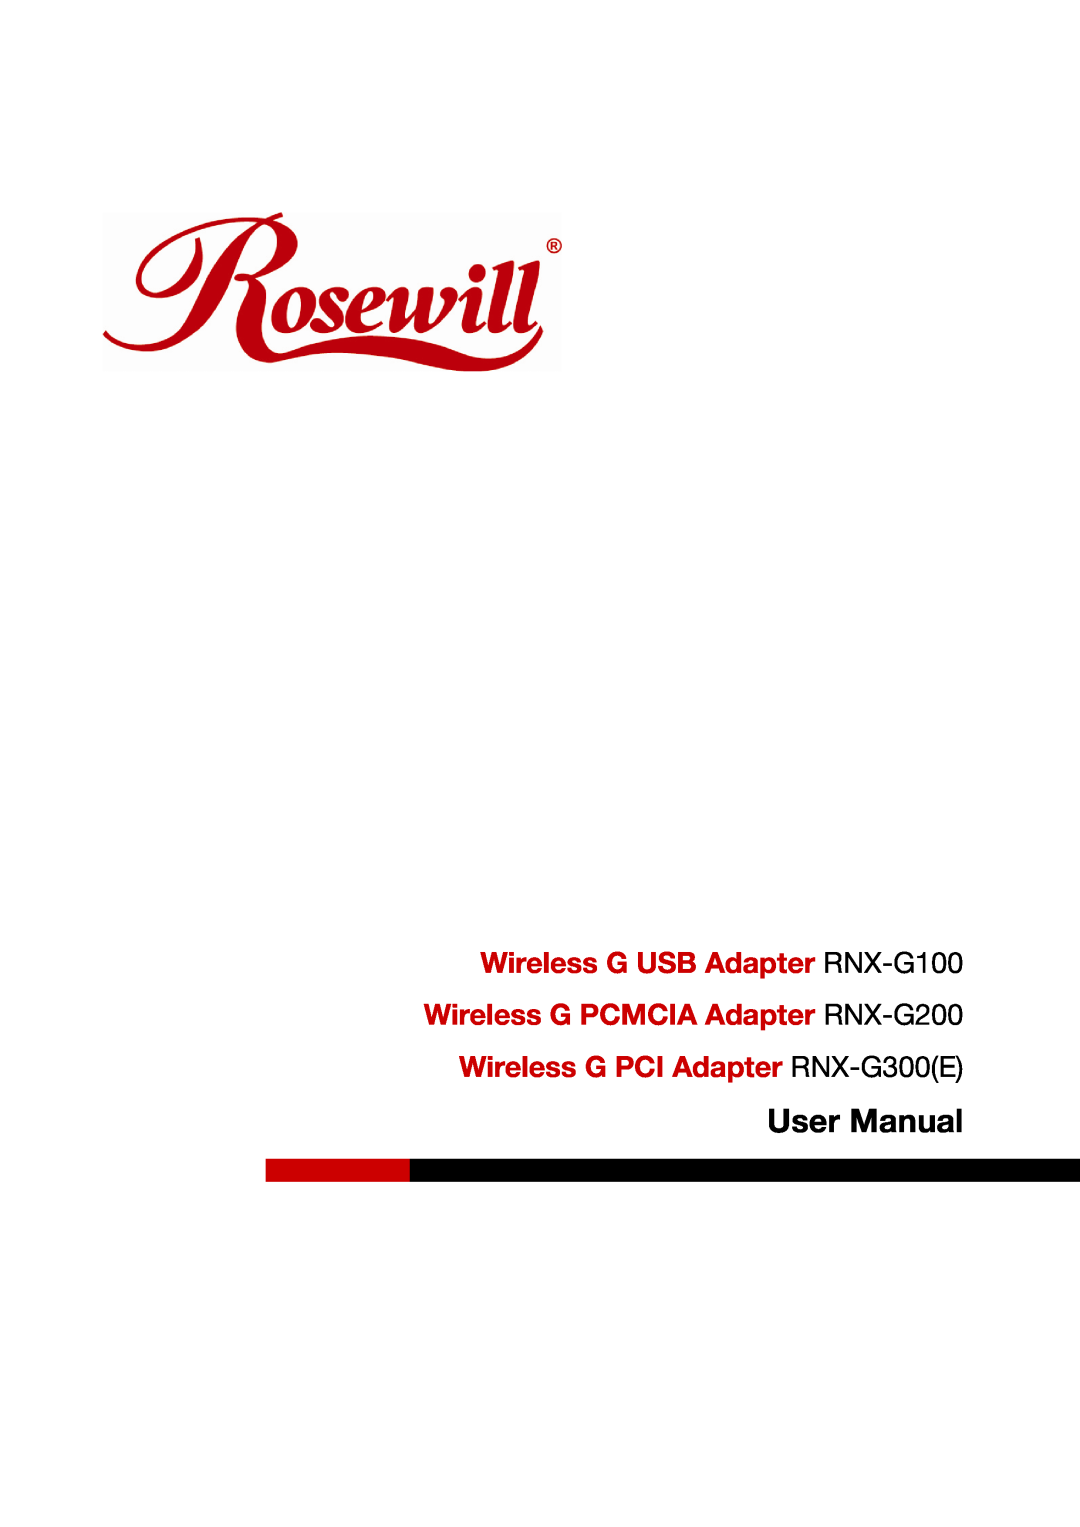 Rosewill RNX-G100, RNX-G200, RNX-G300 user manual User Manual, Wireless G PCI Adapter RNX-G300E 